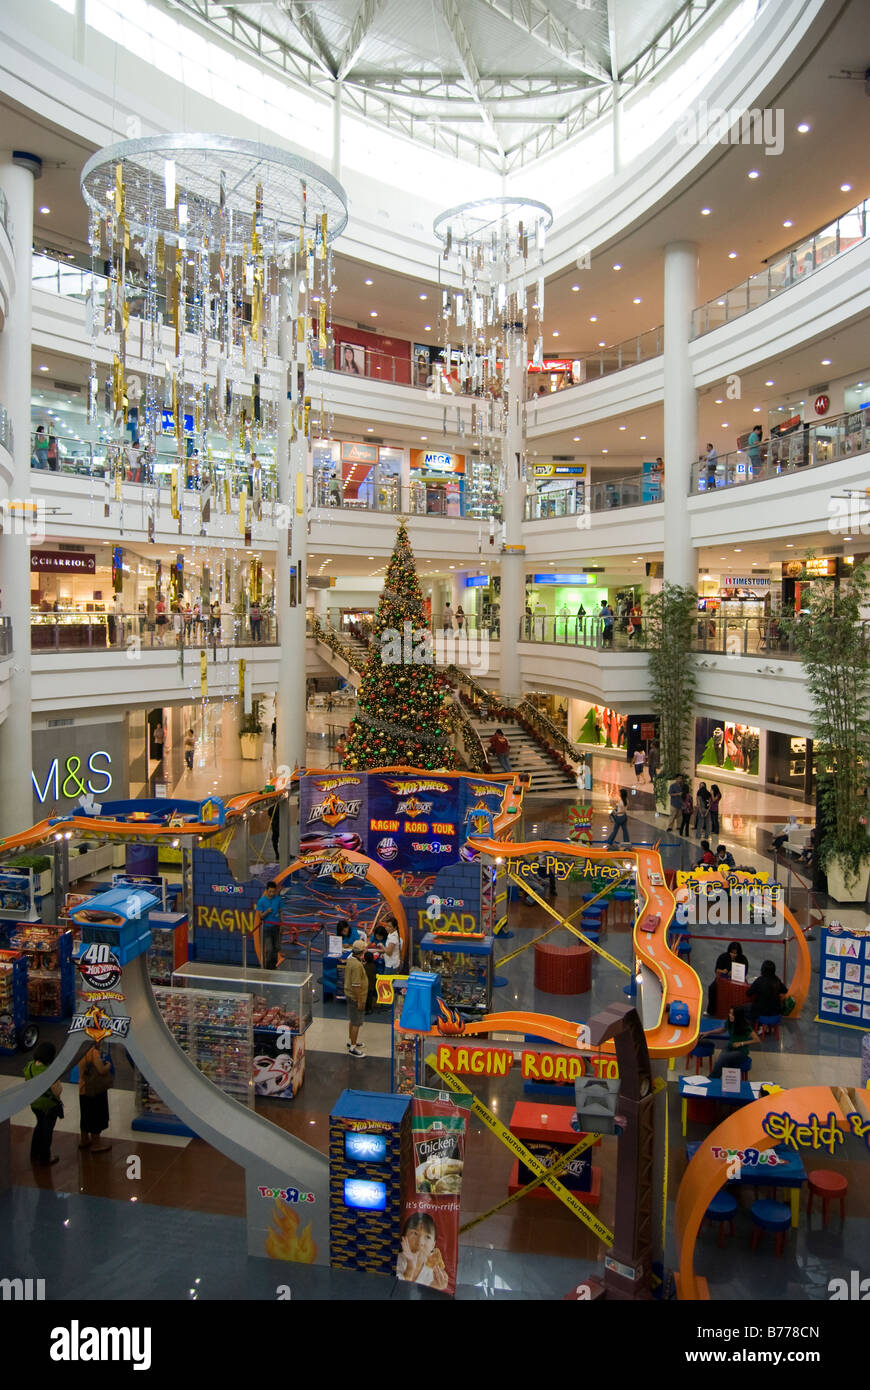 Interior atrium at Christmas, Robinsons Place Shopping Mall, Ermita, Manila, Philippines Stock Photo